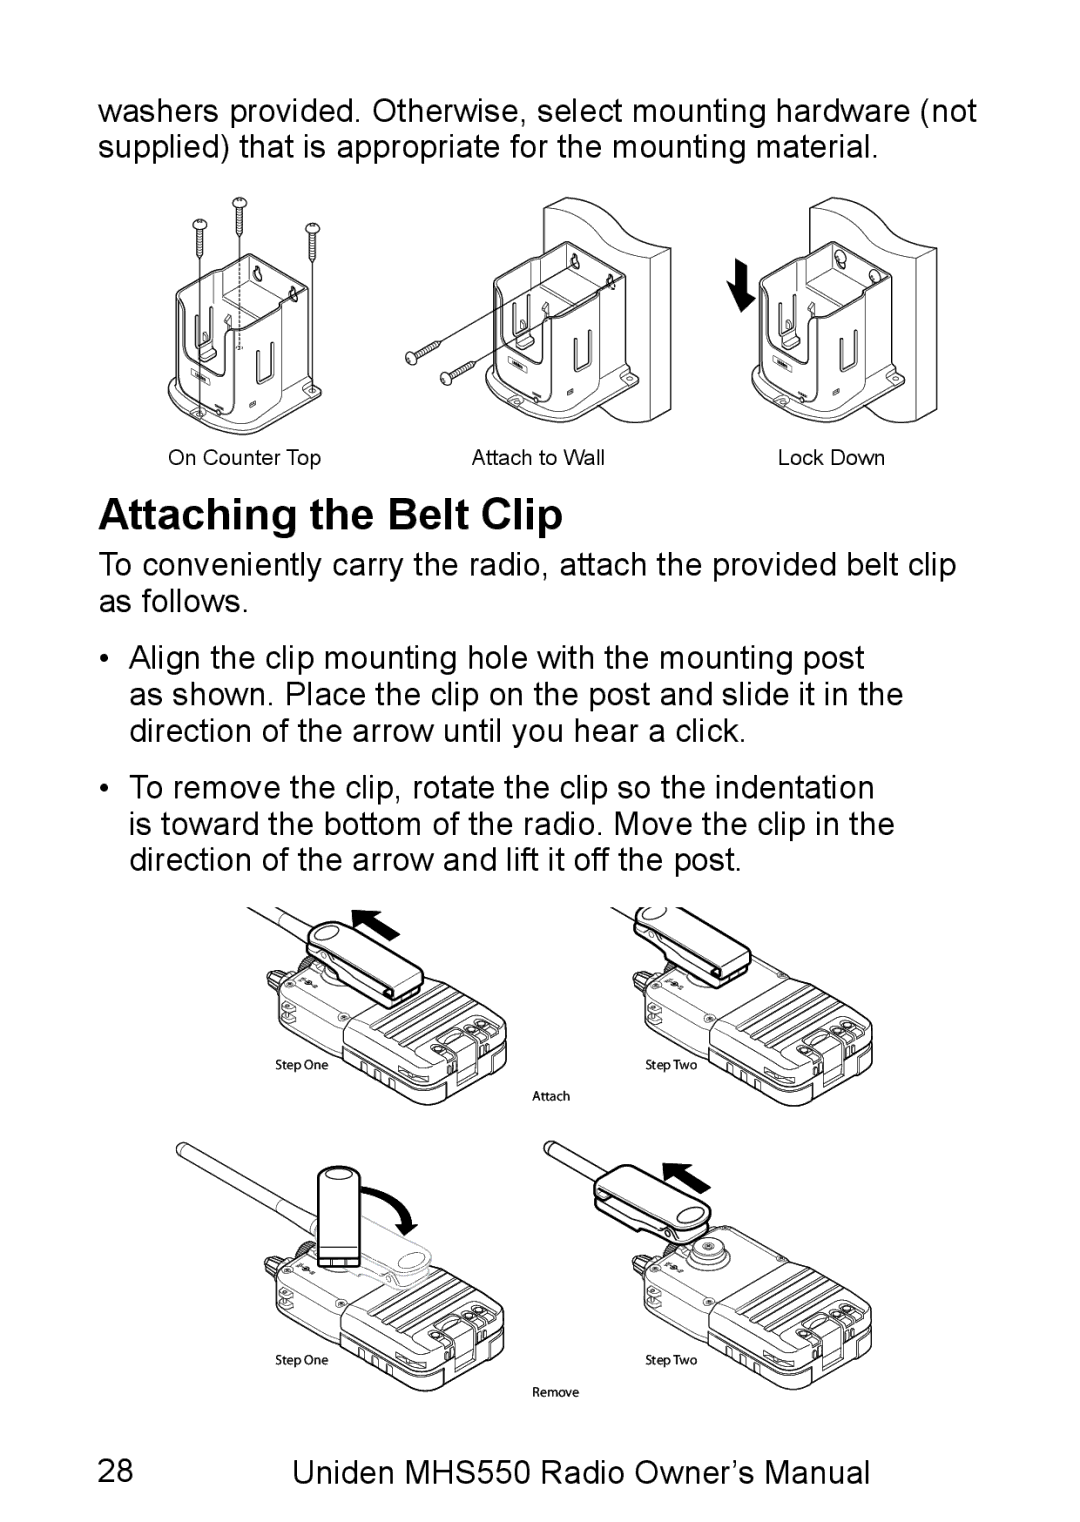 Uniden MHS550 manual Attaching the Belt Clip 